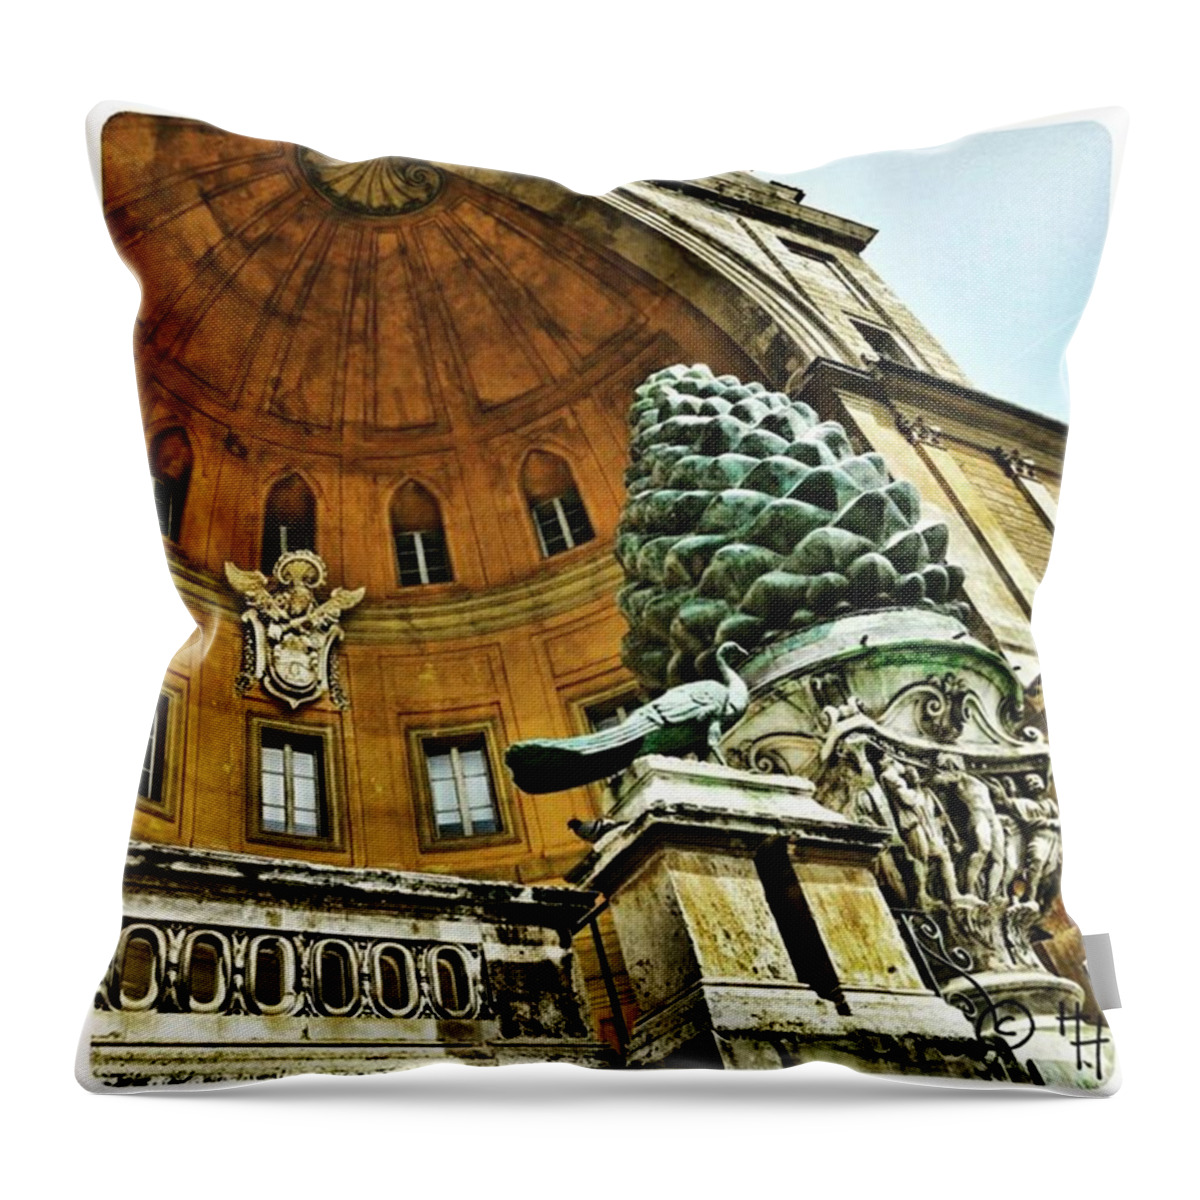 Igroma Throw Pillow featuring the photograph Musei Vaticani by Hans Fotoboek